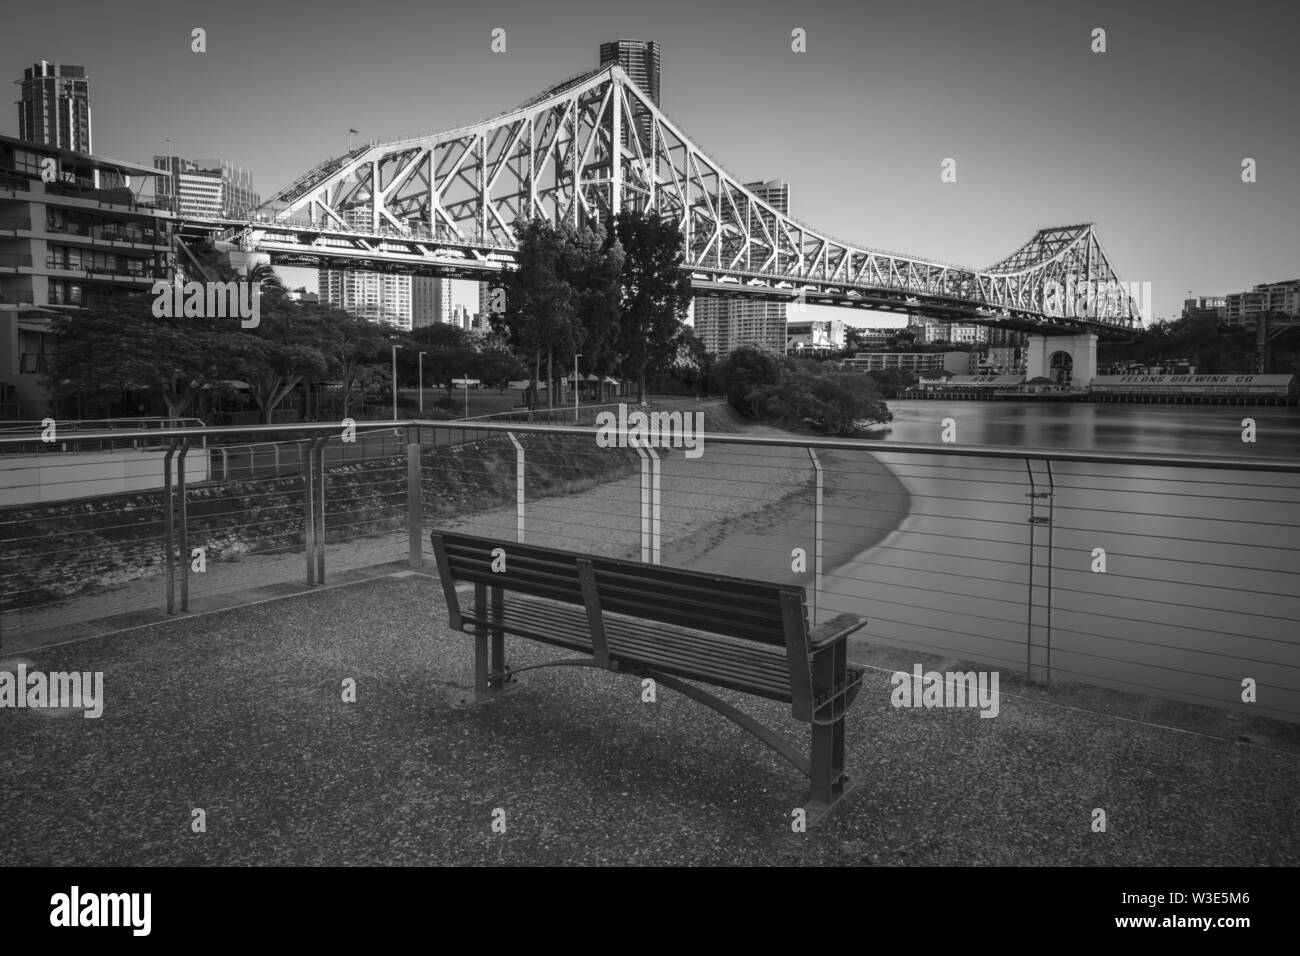 A view of Story Bridge in the city of Brisbane, Australia. Stock Photo